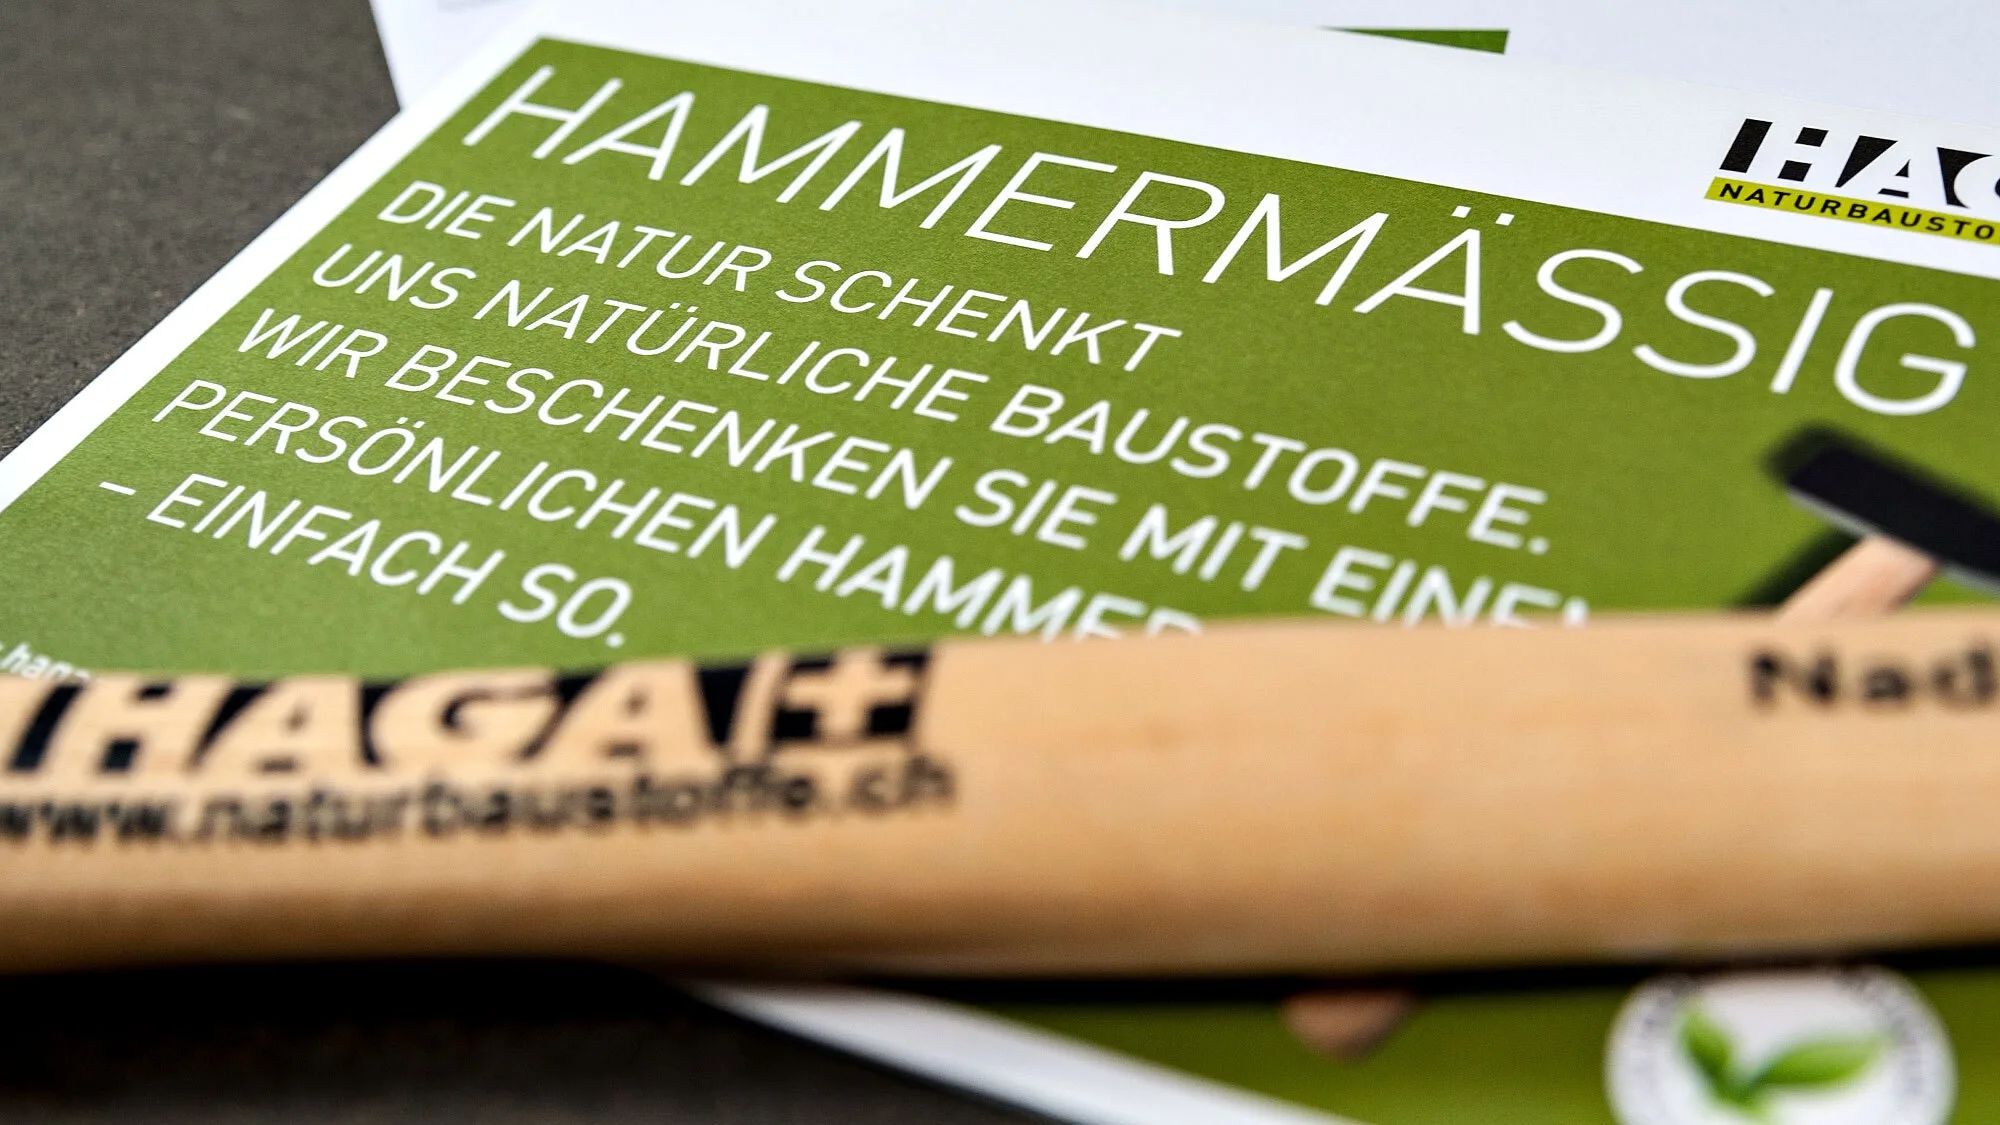 HAGA AG Naturbaustoffe – Hammermailing